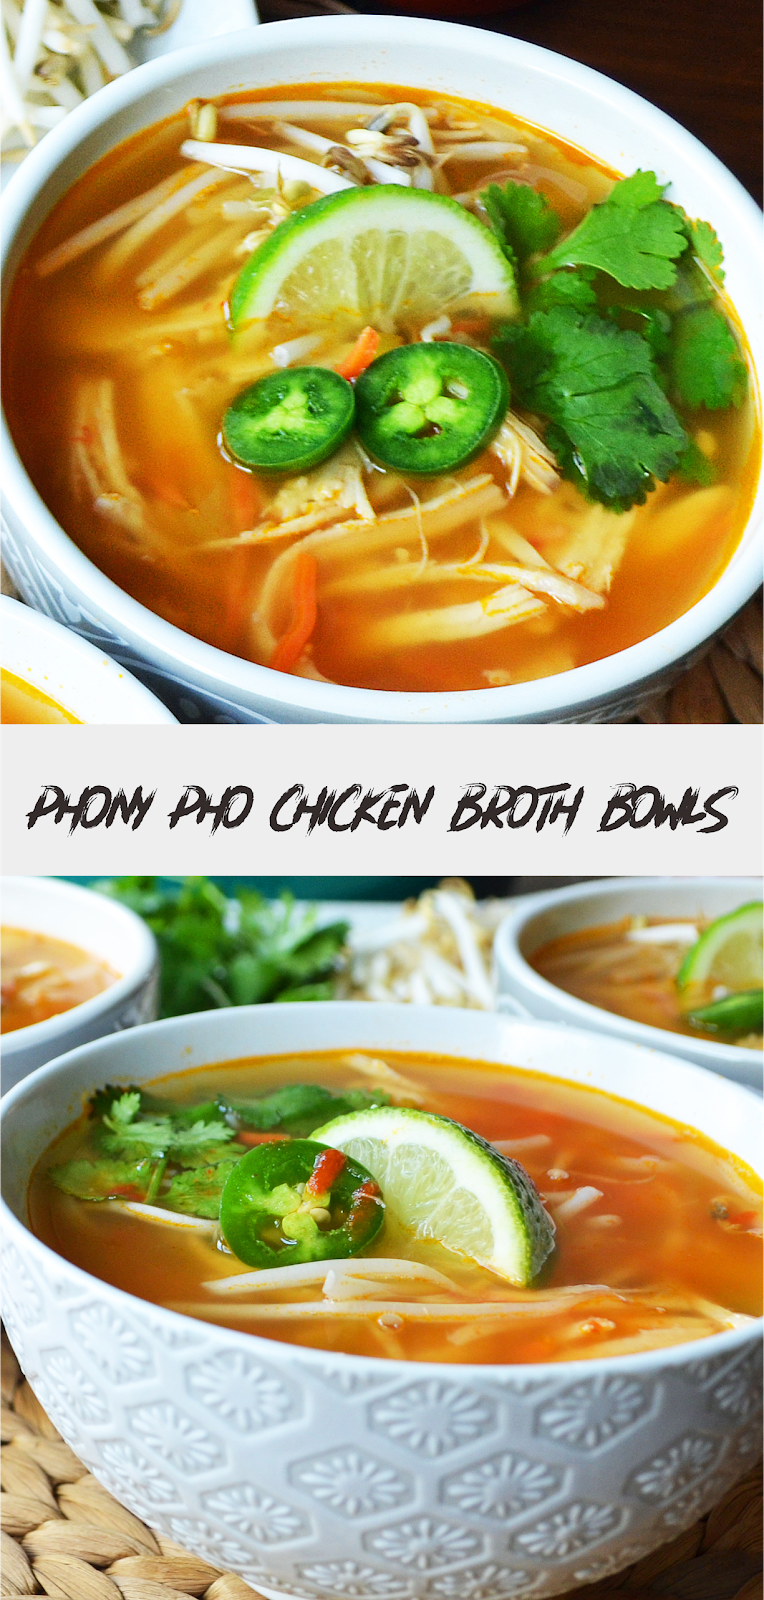 Phony Pho Chicken Broth Bowls | Think food